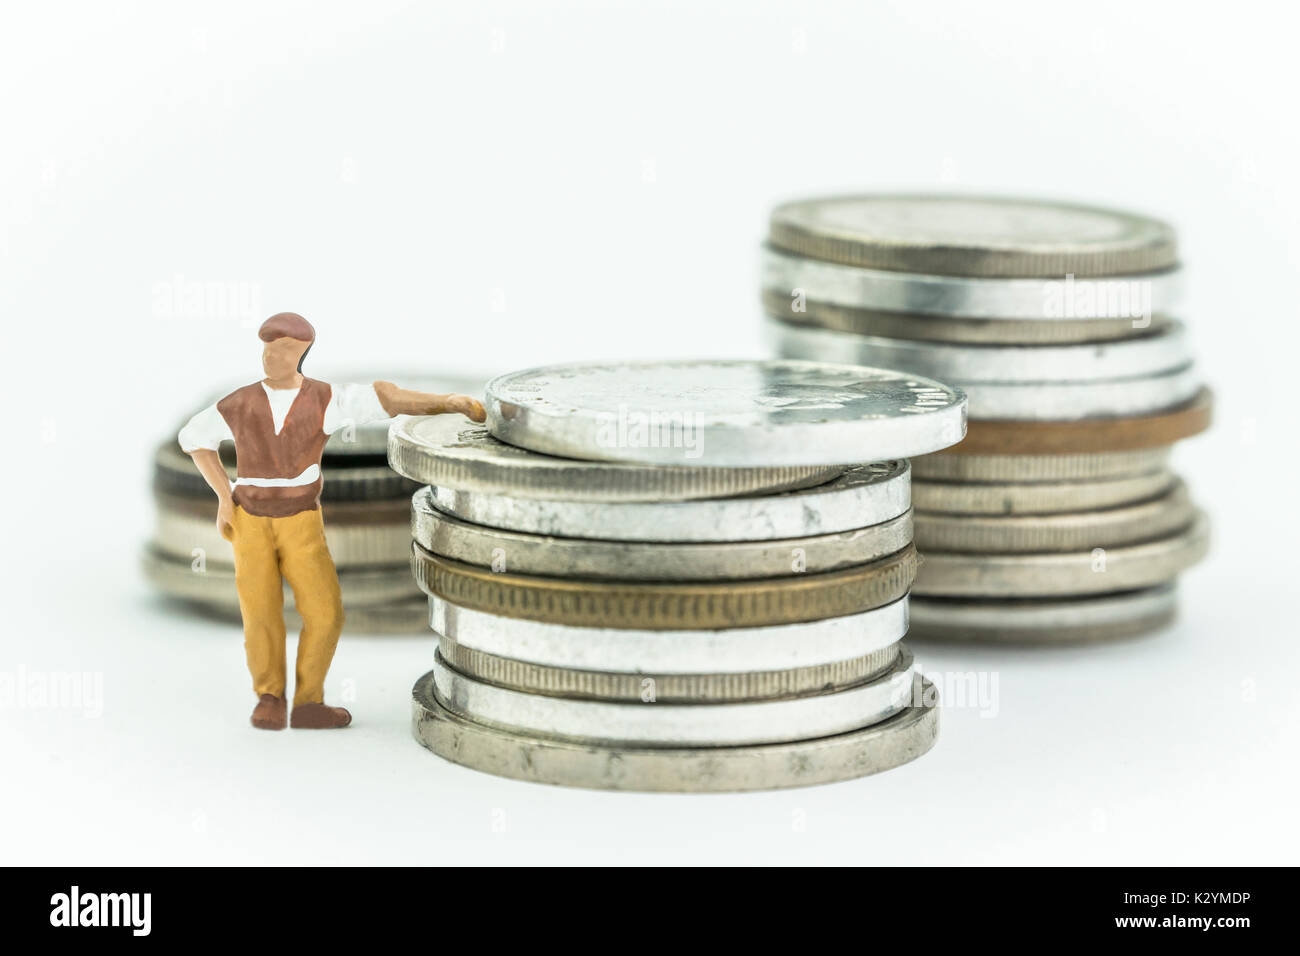 Miniature man next to a few coins, concept economy Stock Photo